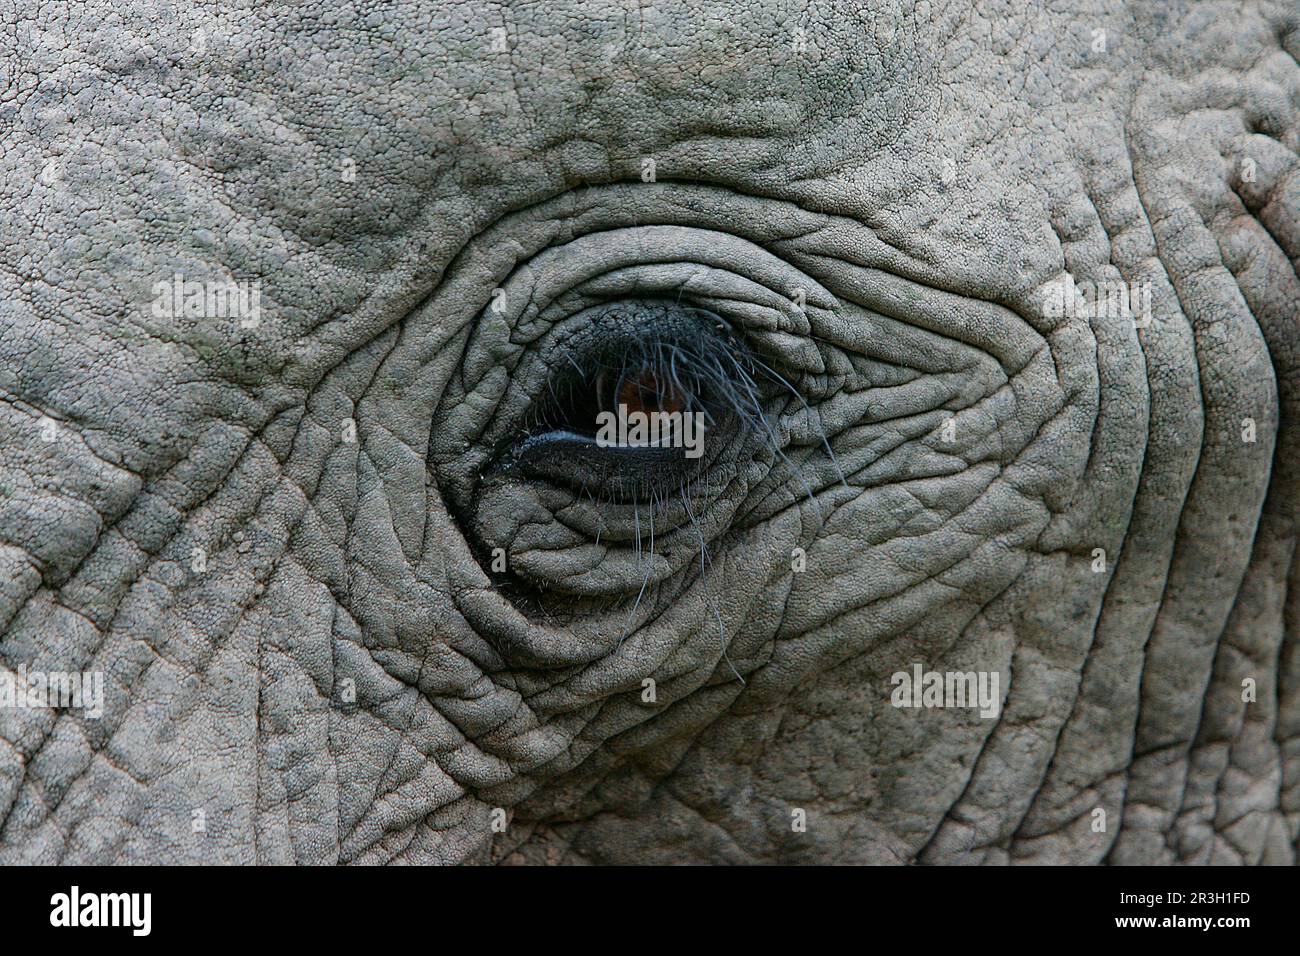 Afrikanischer Elefant (Loxodonta africana) Elefant, Elefanten, Säugetiere, Tiere Elefant ausgewachsen, Nahaufnahme des Auges, Shamwari Wildreservat, Ostkap Stockfoto